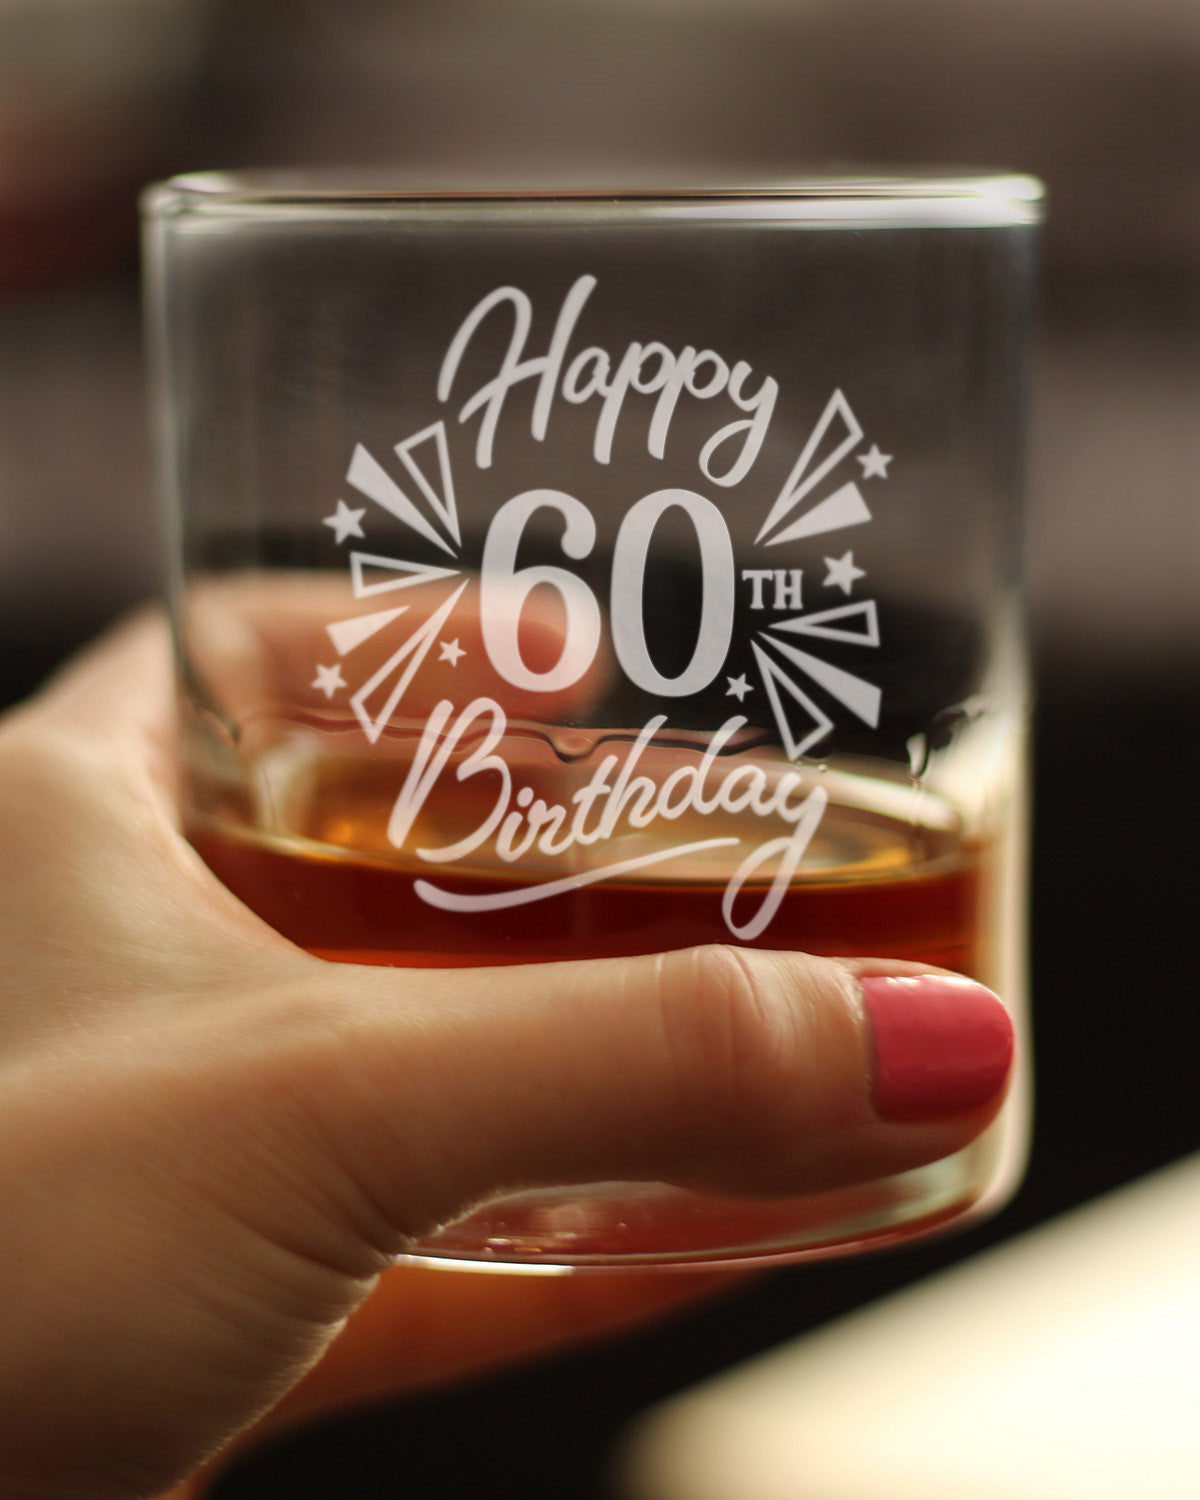 Happy 60th Birthday - Whiskey Rocks Glass Gifts for Men &amp; Women Turning 60 - Fun Retro Bday Whisky Drinking Tumbler